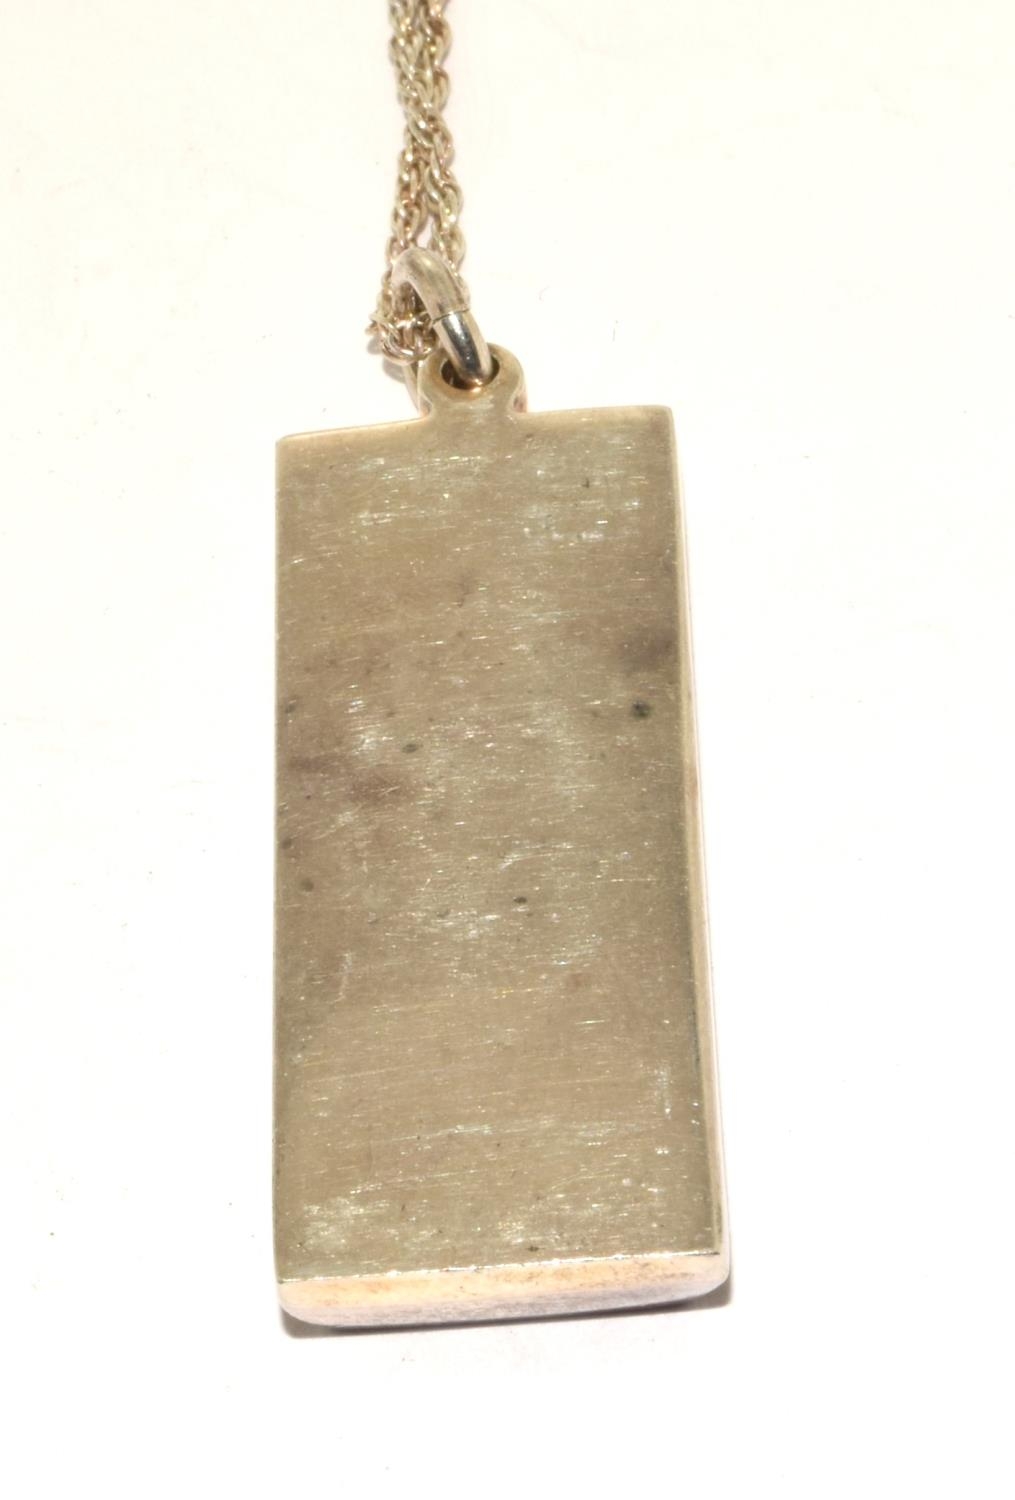 925 silver full hallmark Ingot and chain 31g  - Image 3 of 3